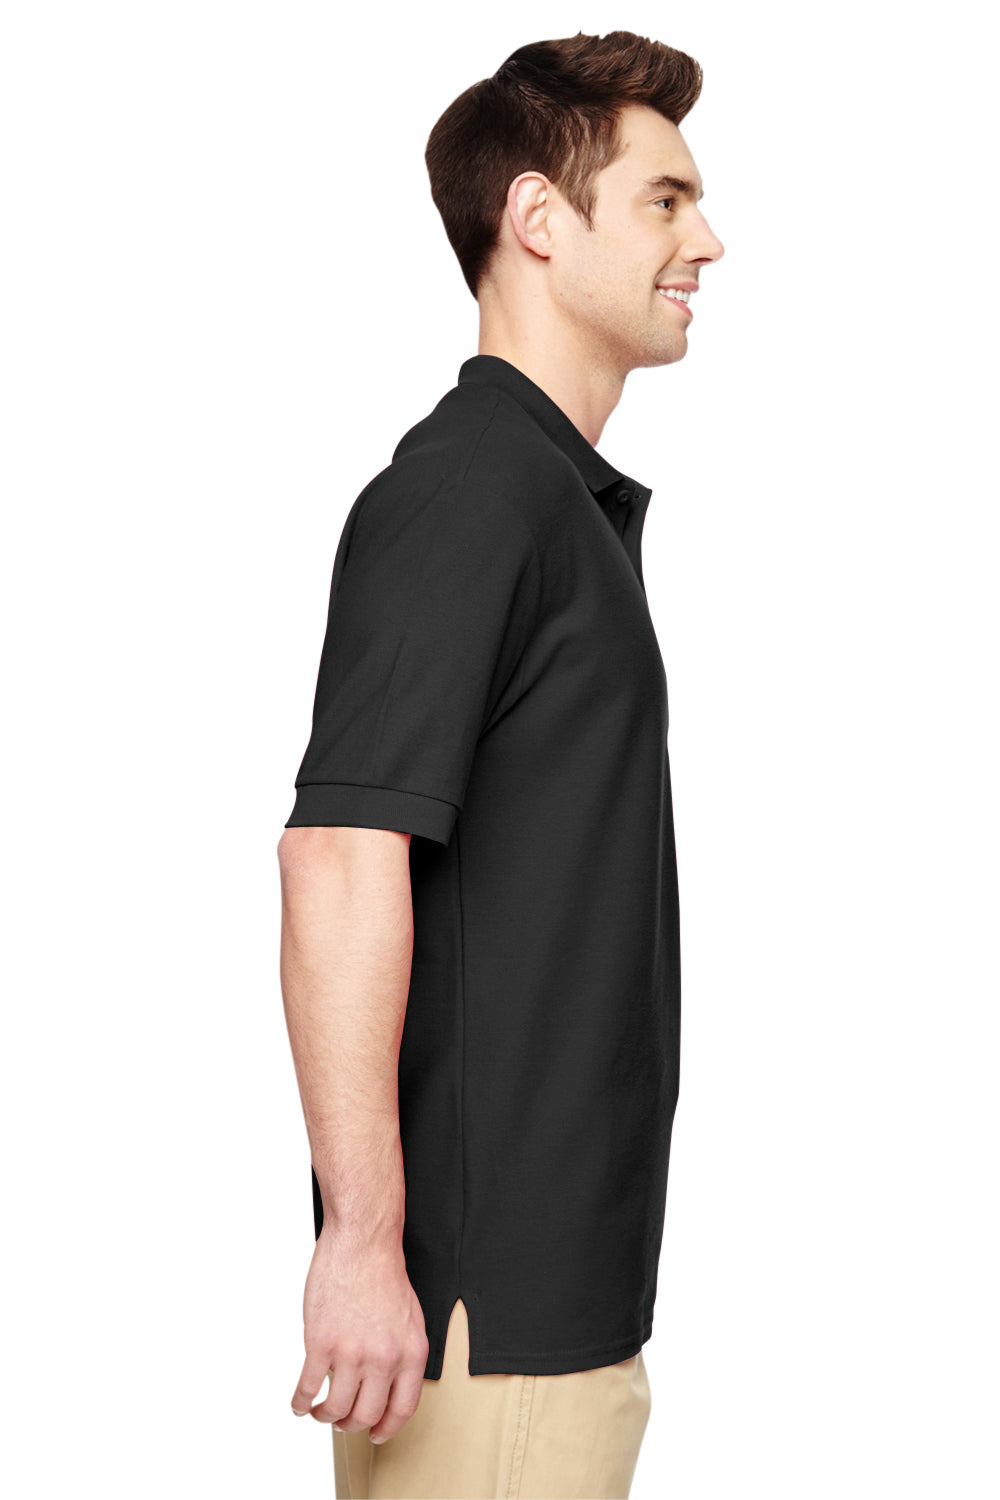 Gildan G828 Mens Short Sleeve Polo Shirt Black Side